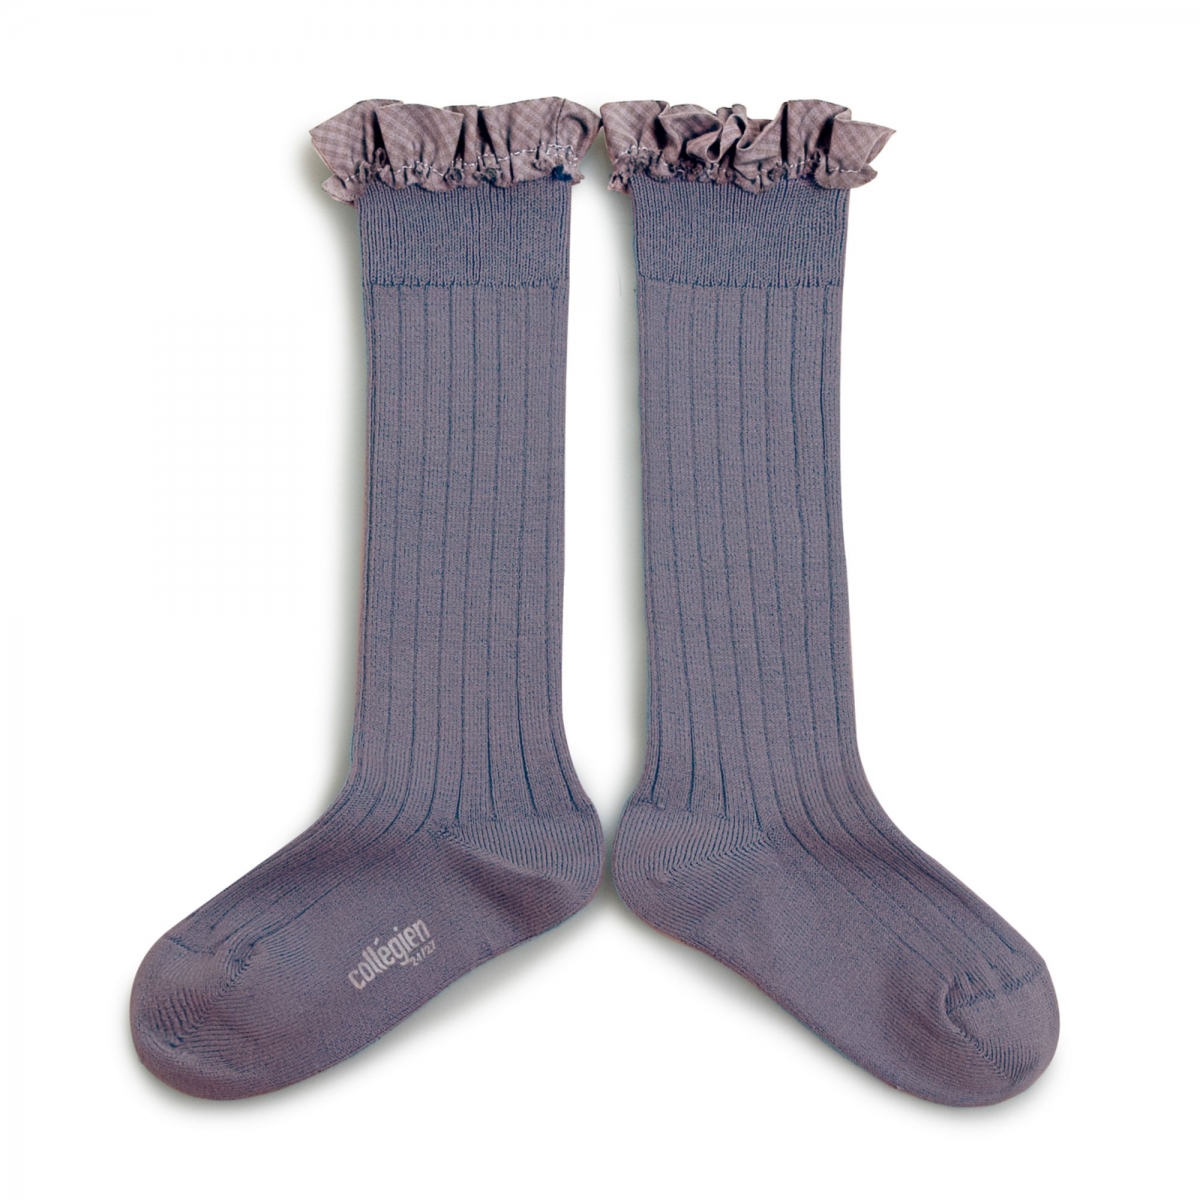 Collégien - Knee high socks Apolline fleur de lavande - Strumpfhosen und Socken - 2961 777 Apolline 